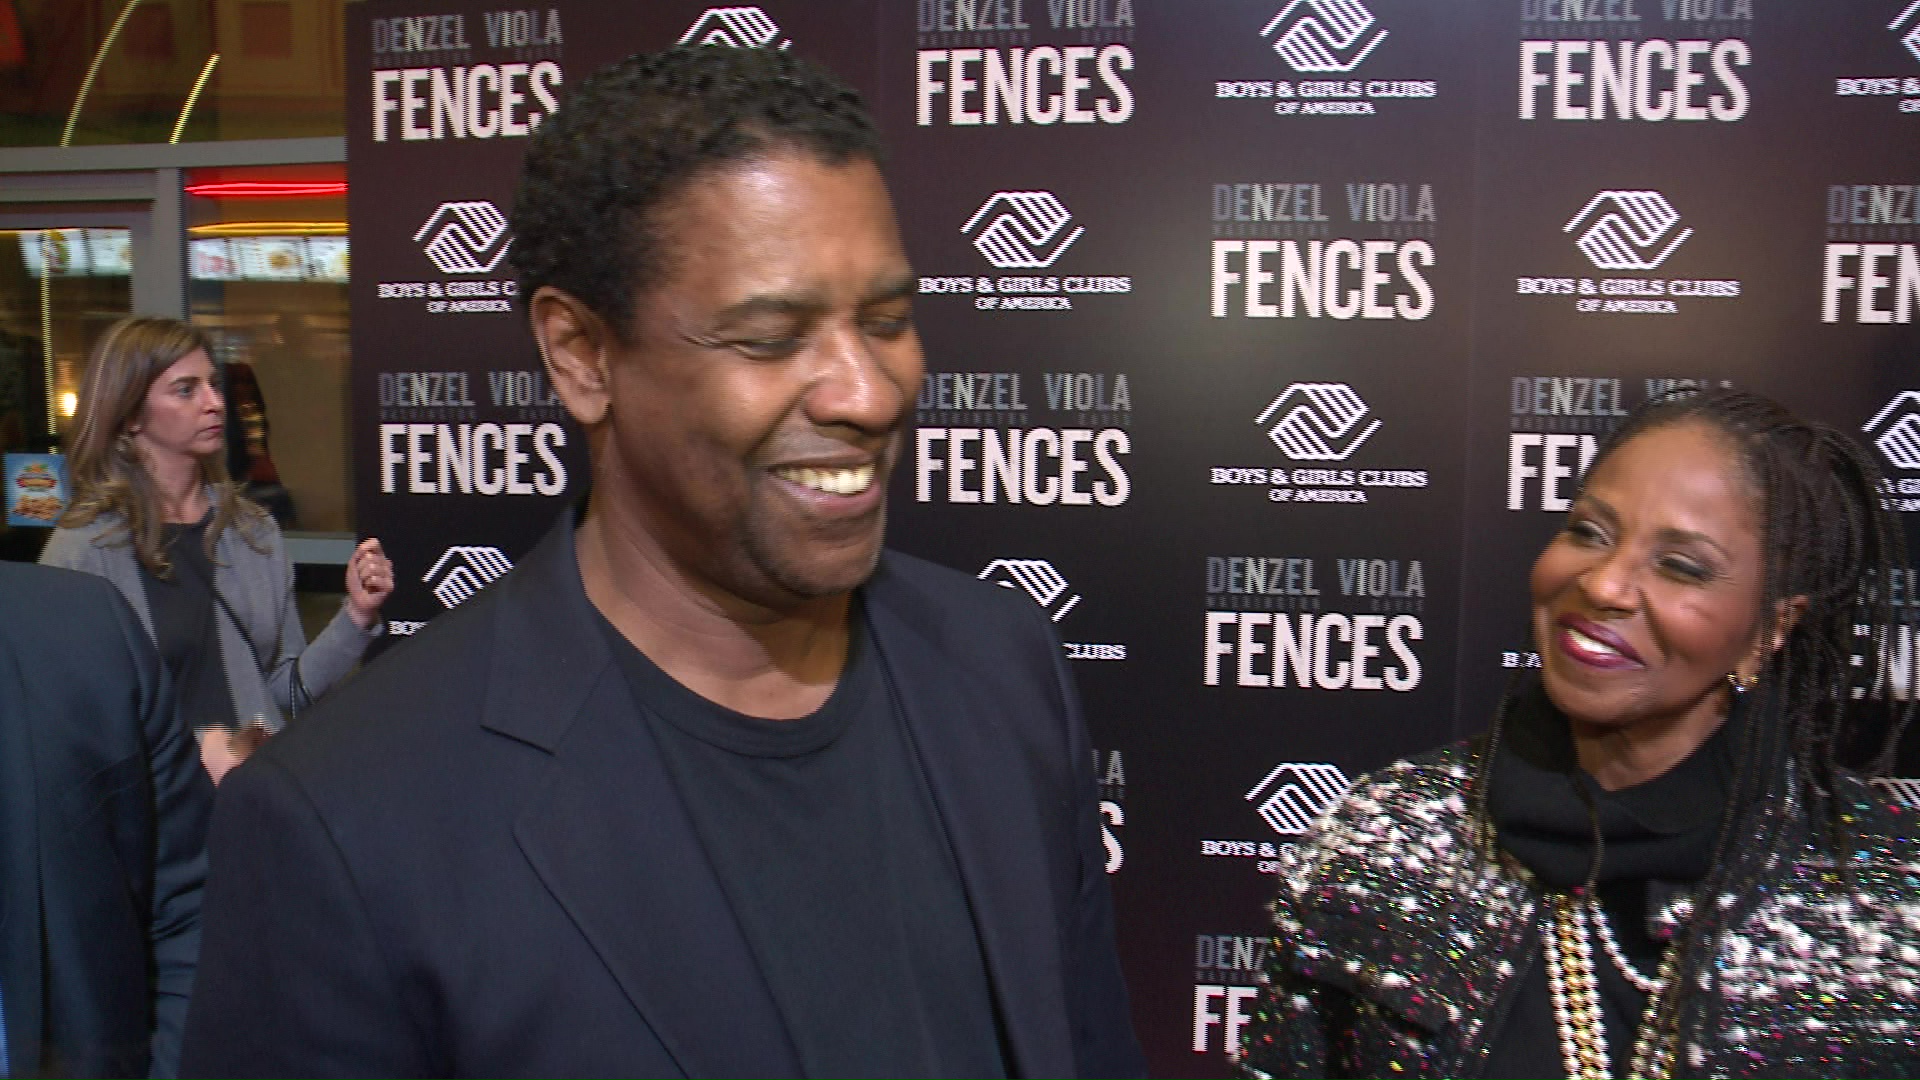 Denzel Washington attends screening of new movie Fences in Atlanta 13wmaz